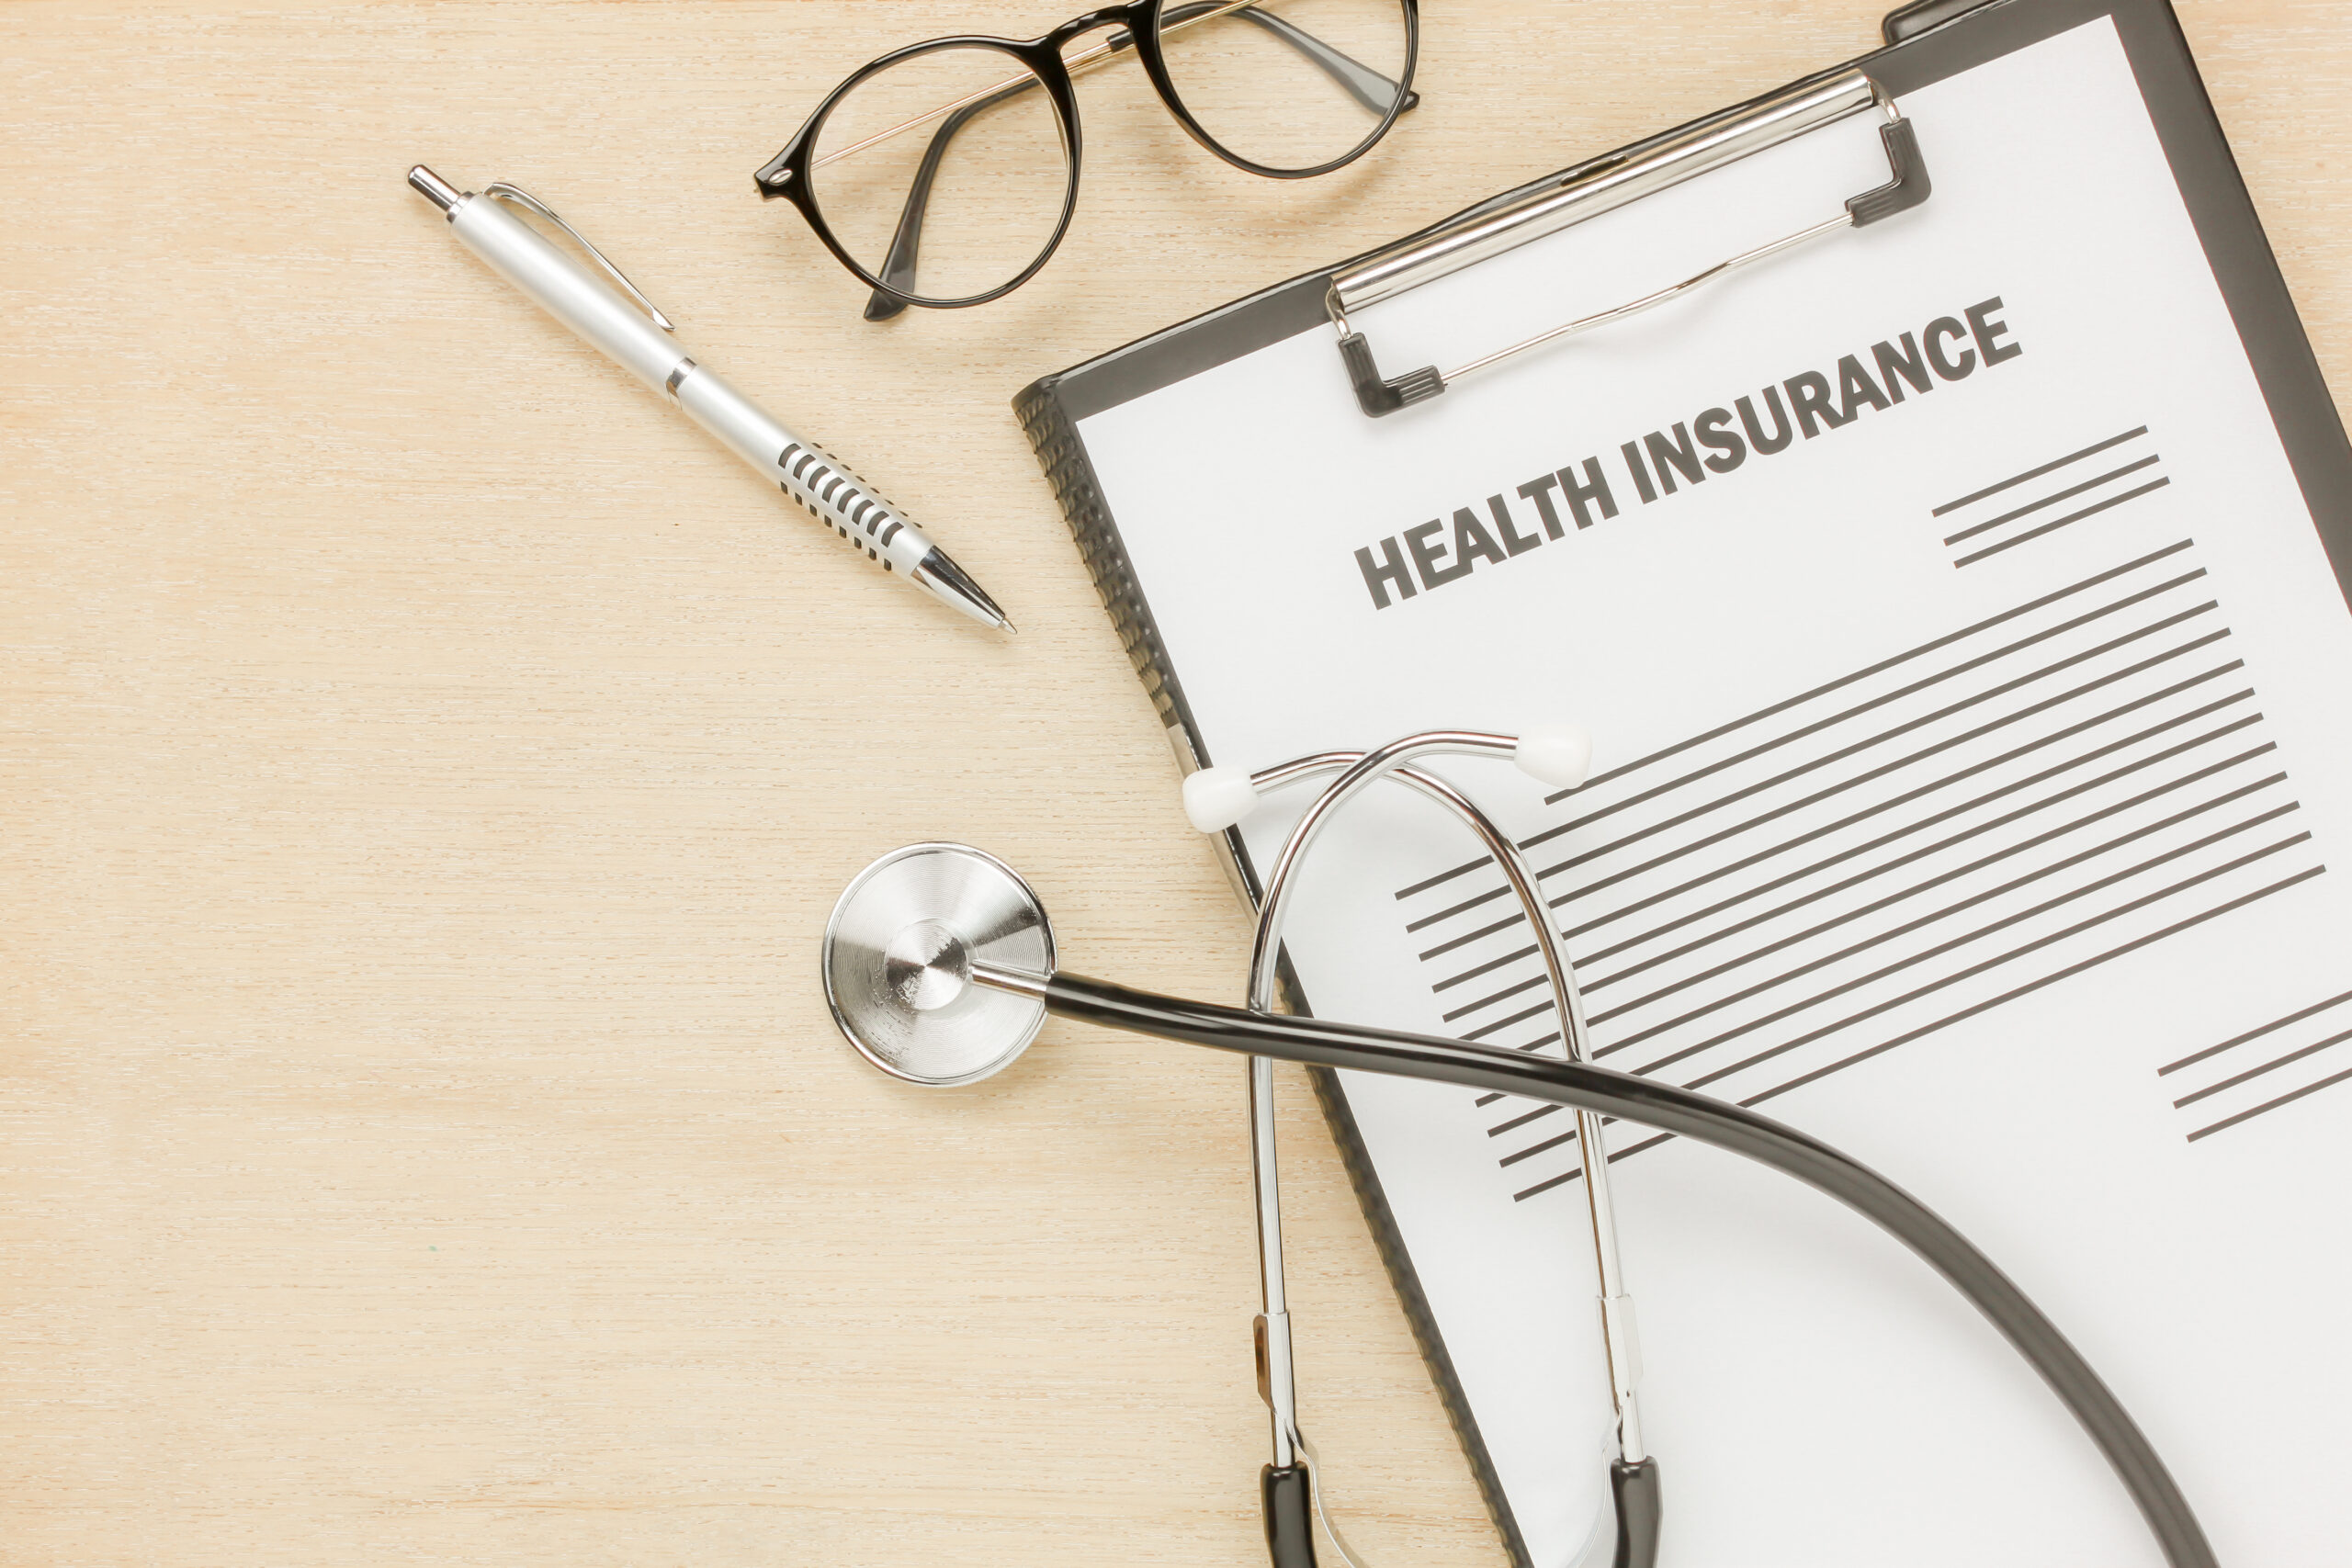 How to file reimburshment claim on Health Insurance Policy?